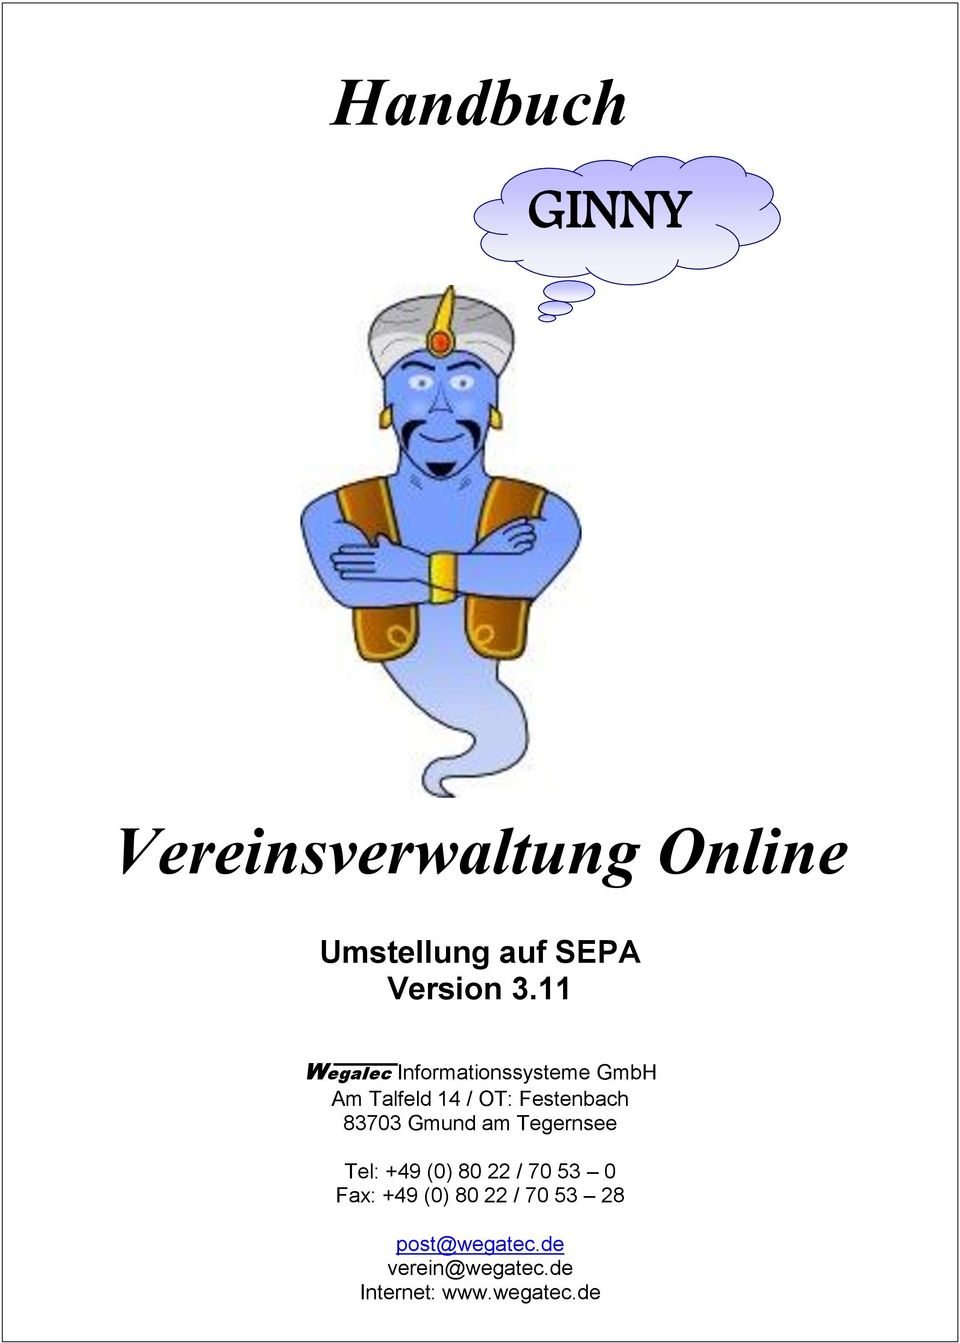 83703 Gmund am Tegernsee Tel: +49 (0) 80 22 / 70 53 0 Fax: +49 (0) 80